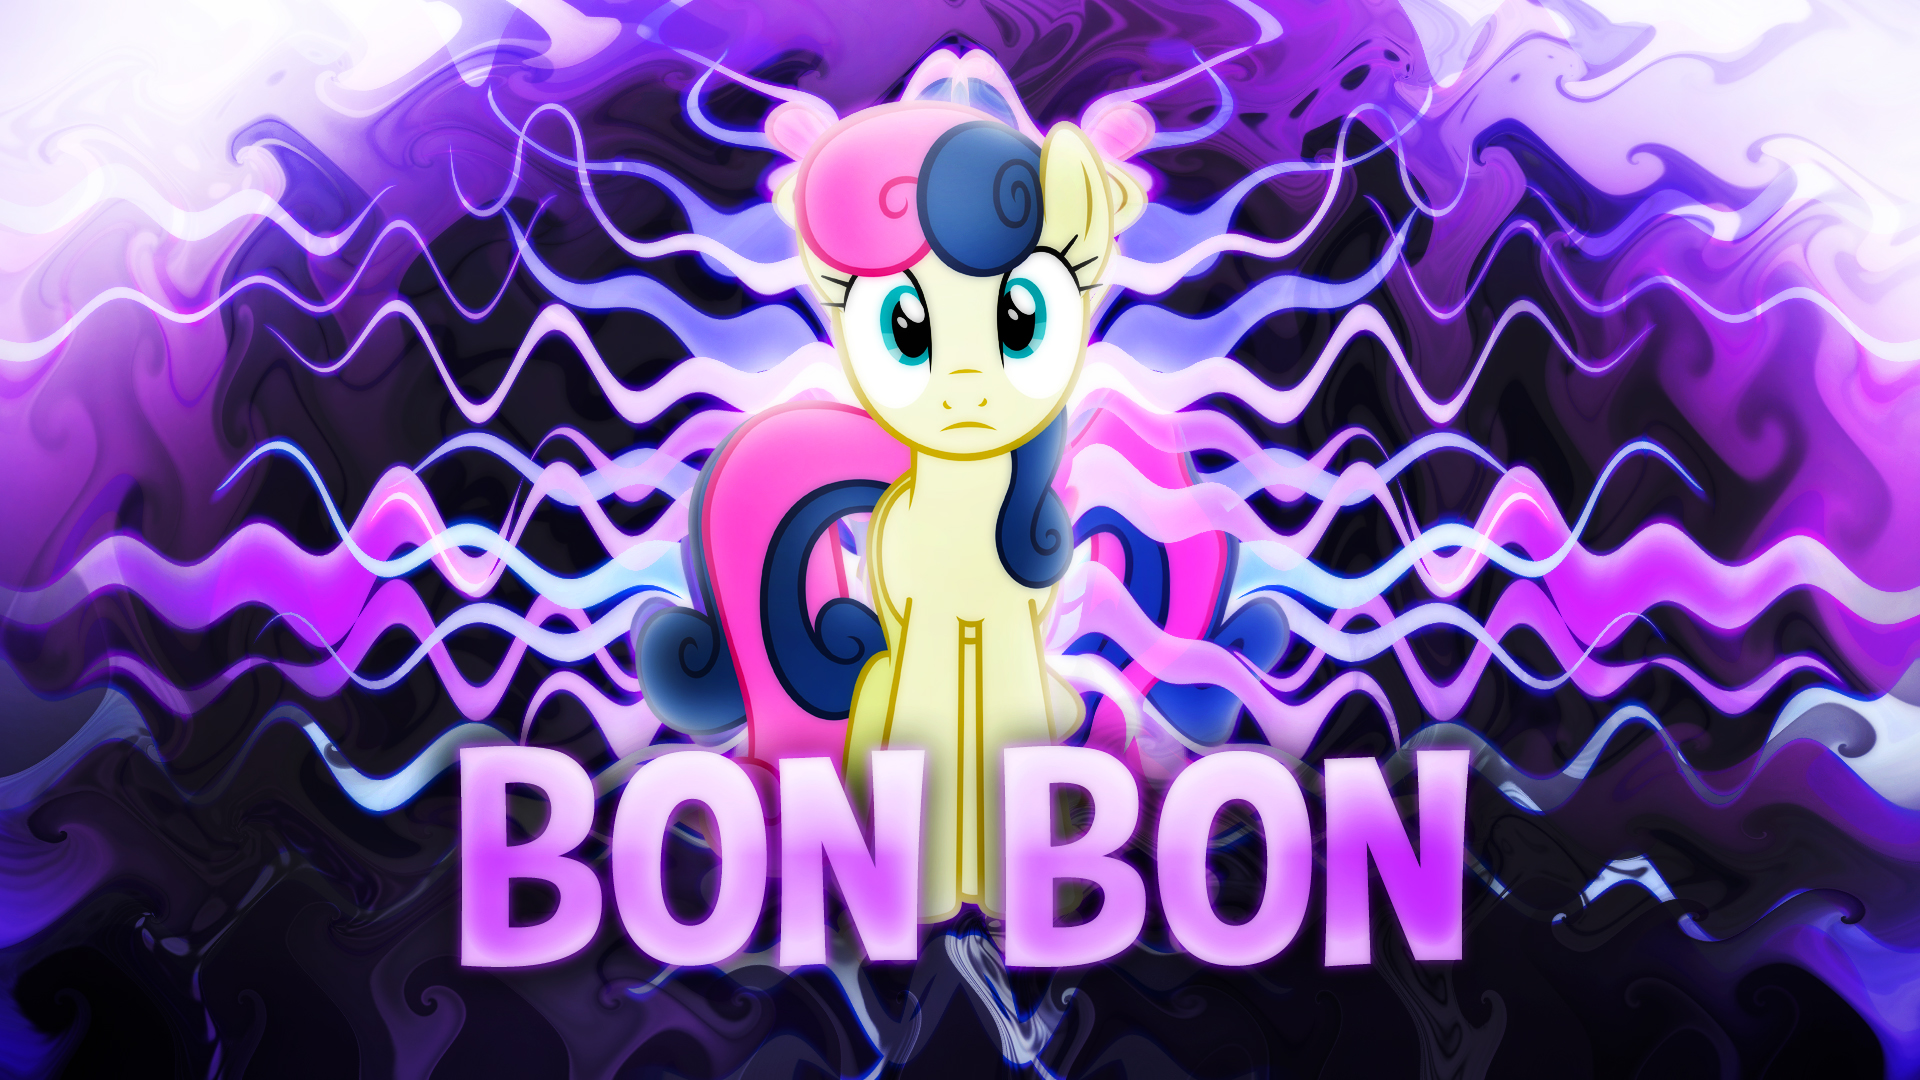 Bonbon by bengo538 and Xtrl